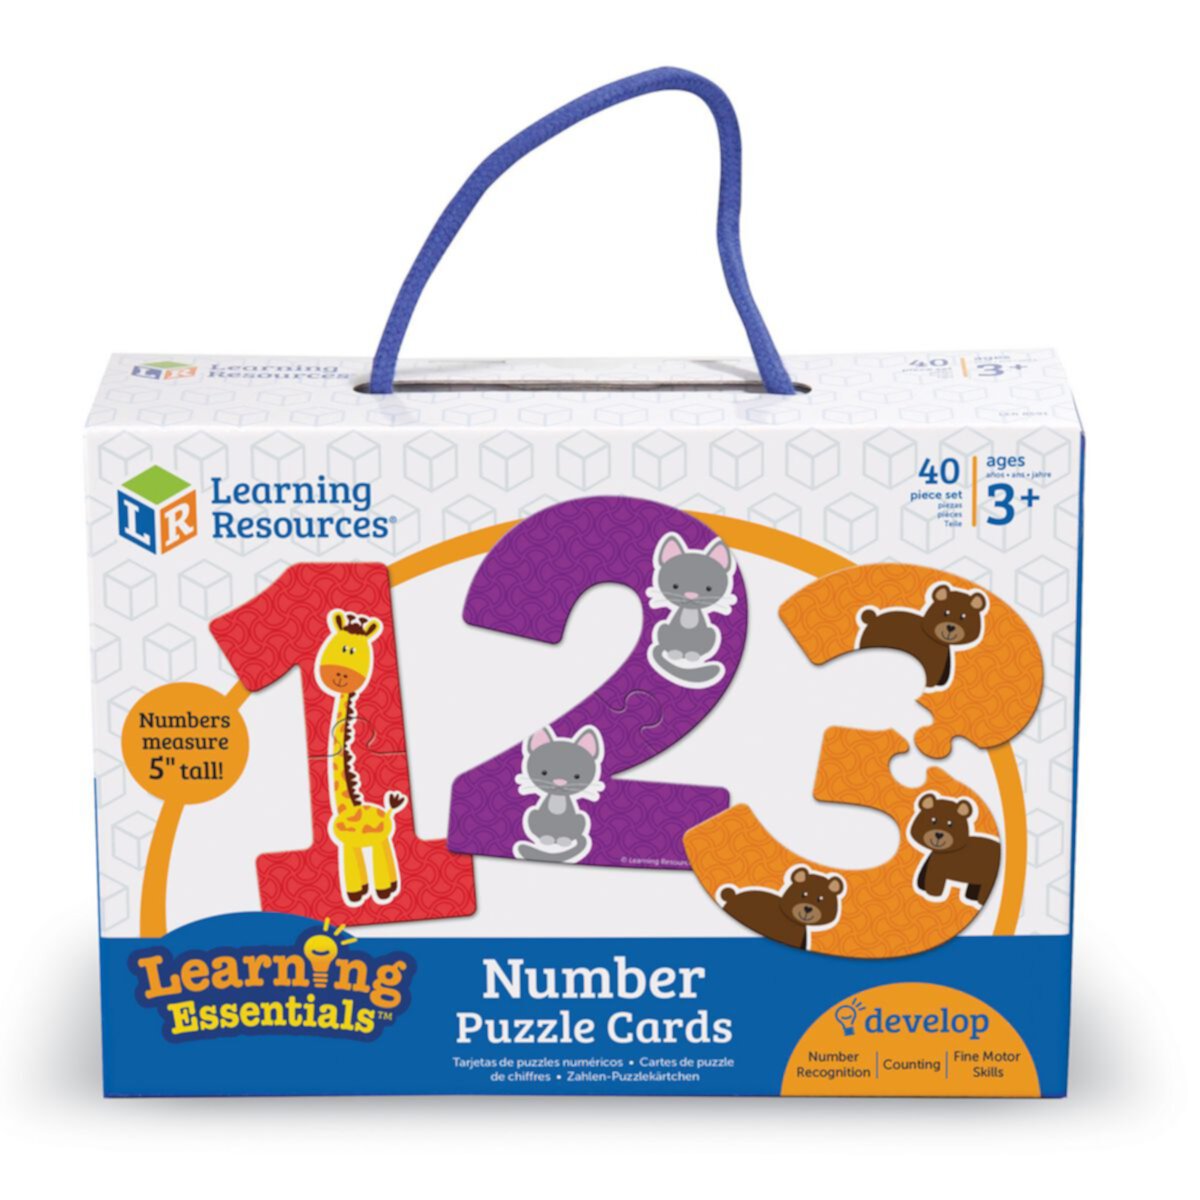 Number Puzzle. Numbers Cards Puzzles. Ler2823 развивающая игра "Построй свой Лабиринт" (32 элемента). Tesco number Puzzle. Головоломки 40